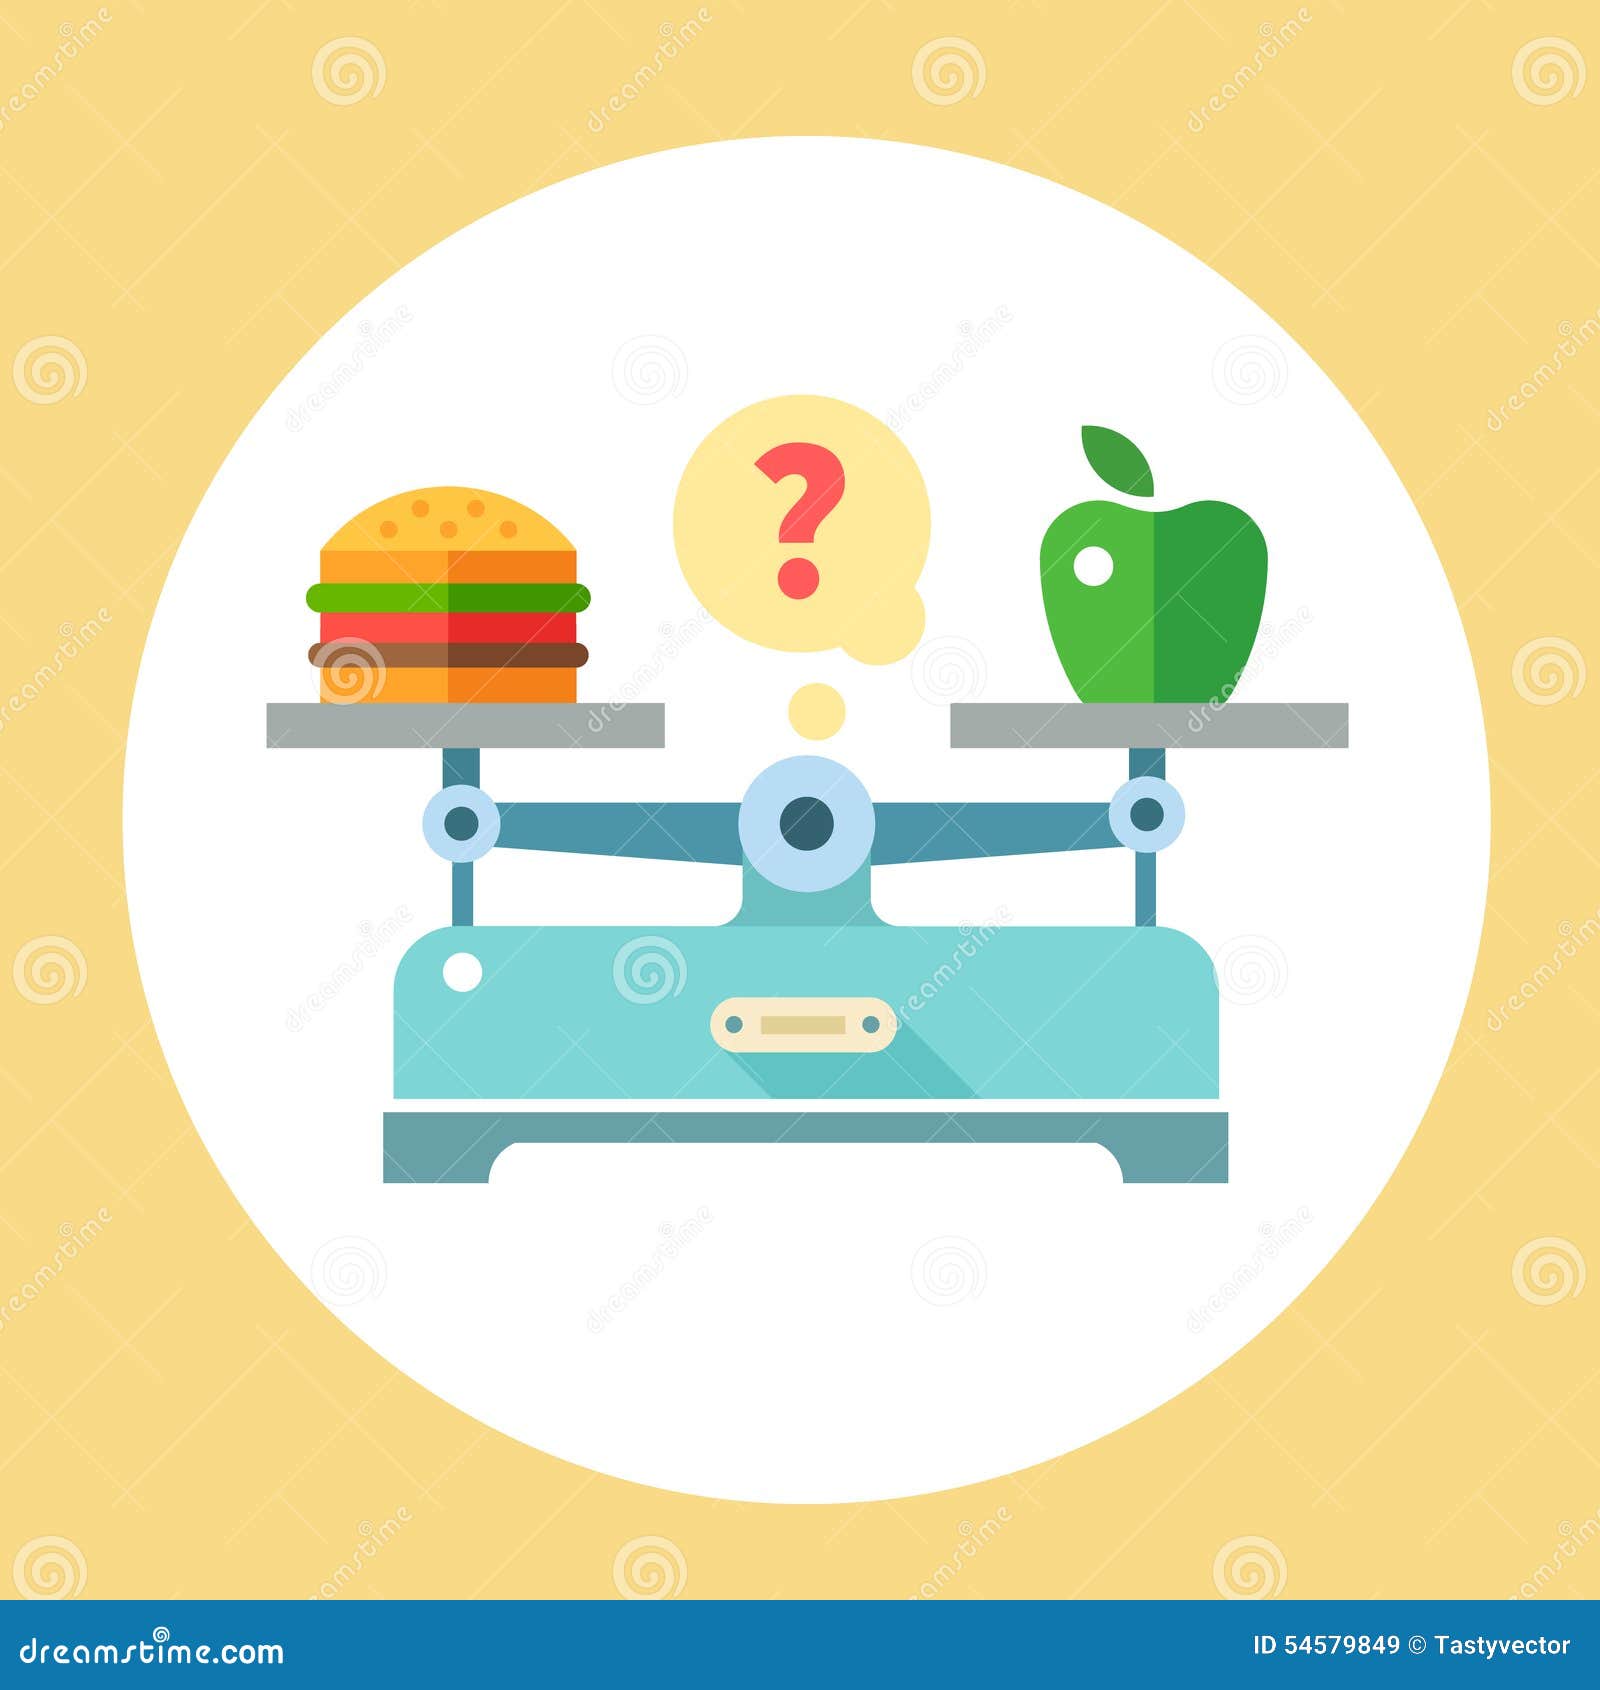 https://thumbs.dreamstime.com/z/apple-hamburger-scales-diet-healthy-food-vector-flat-illustration-54579849.jpg